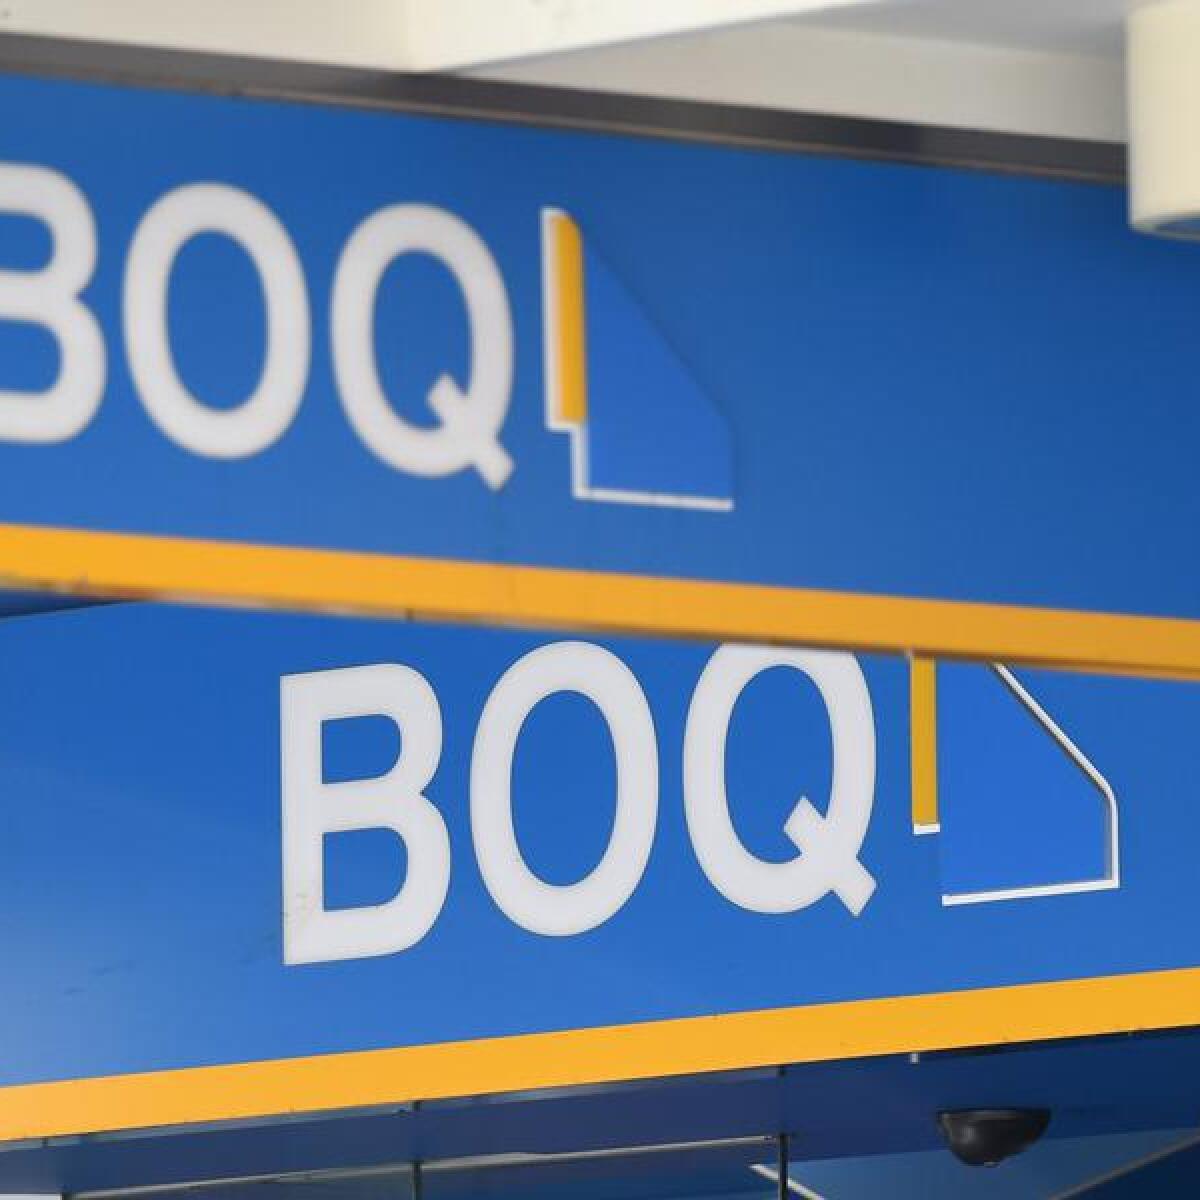 A Bank of Queensland (BOQ) sign